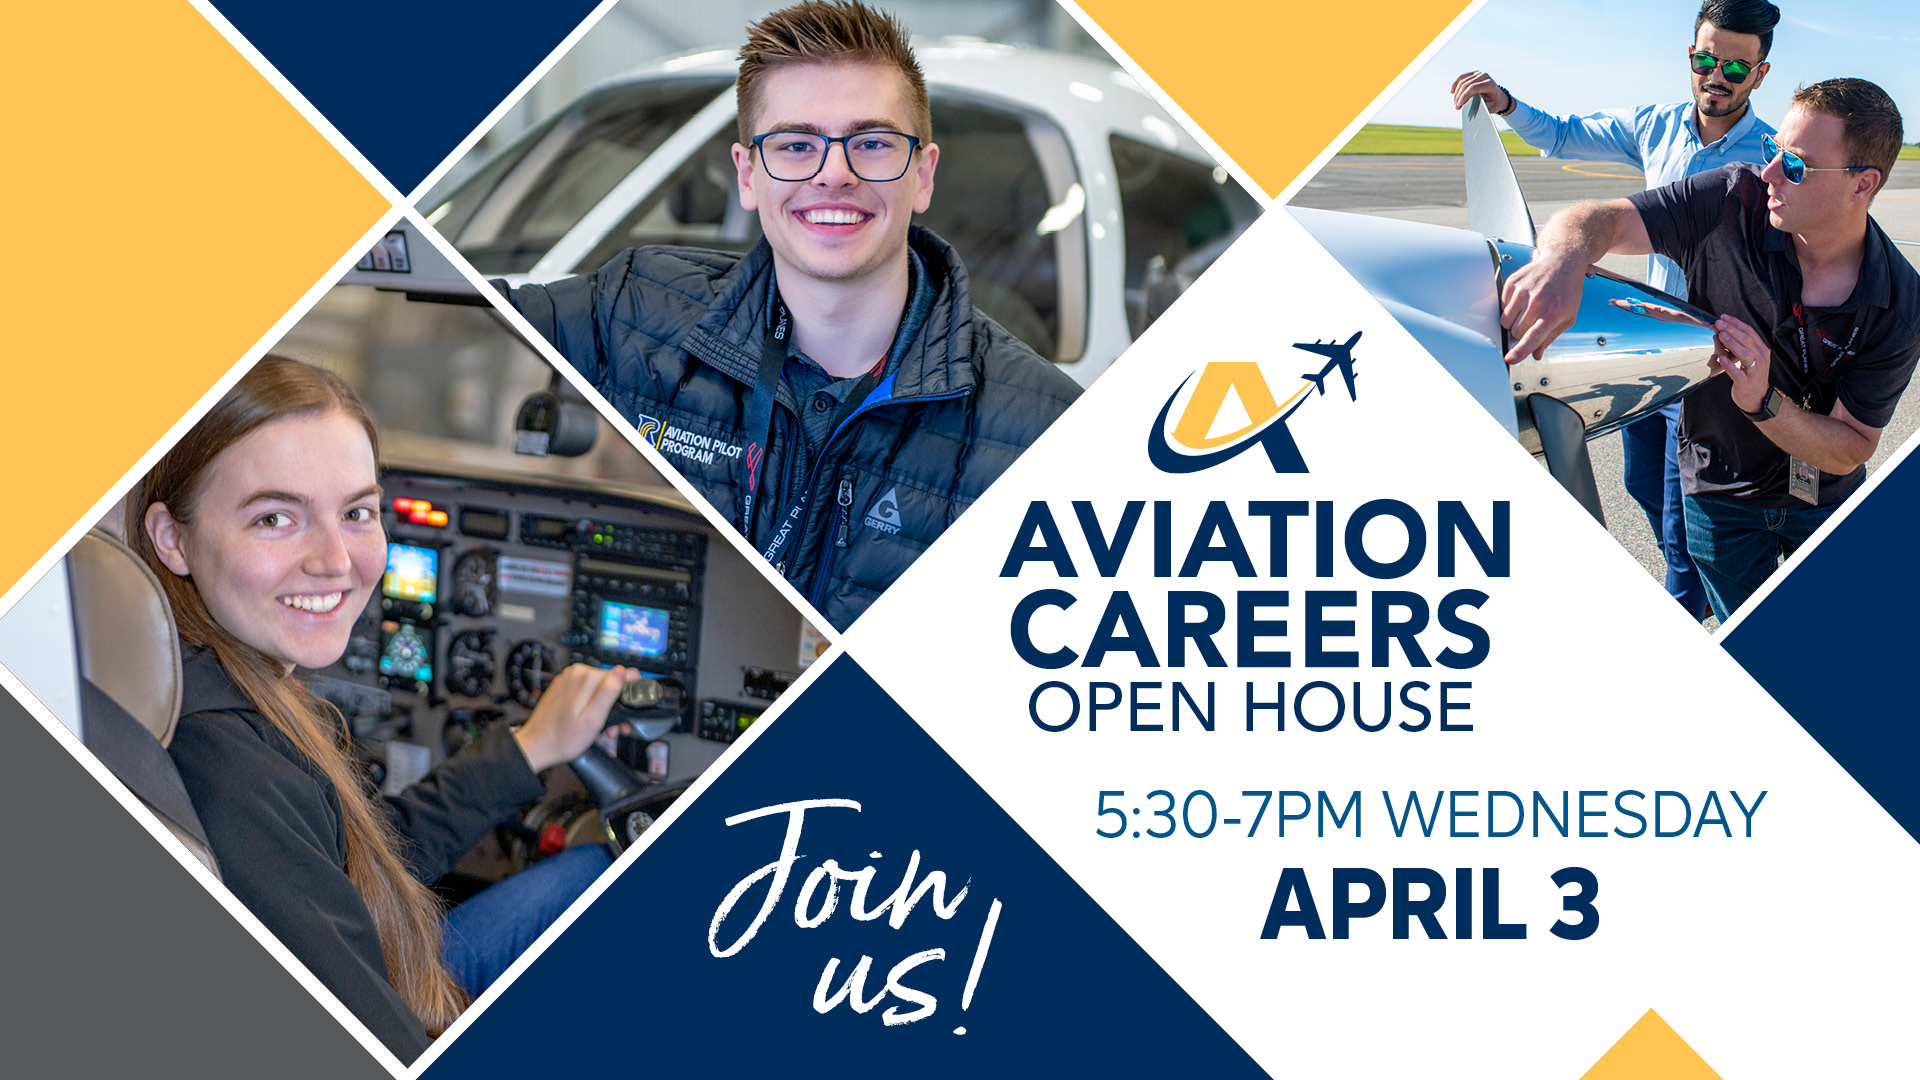 Aviation Open House April 3